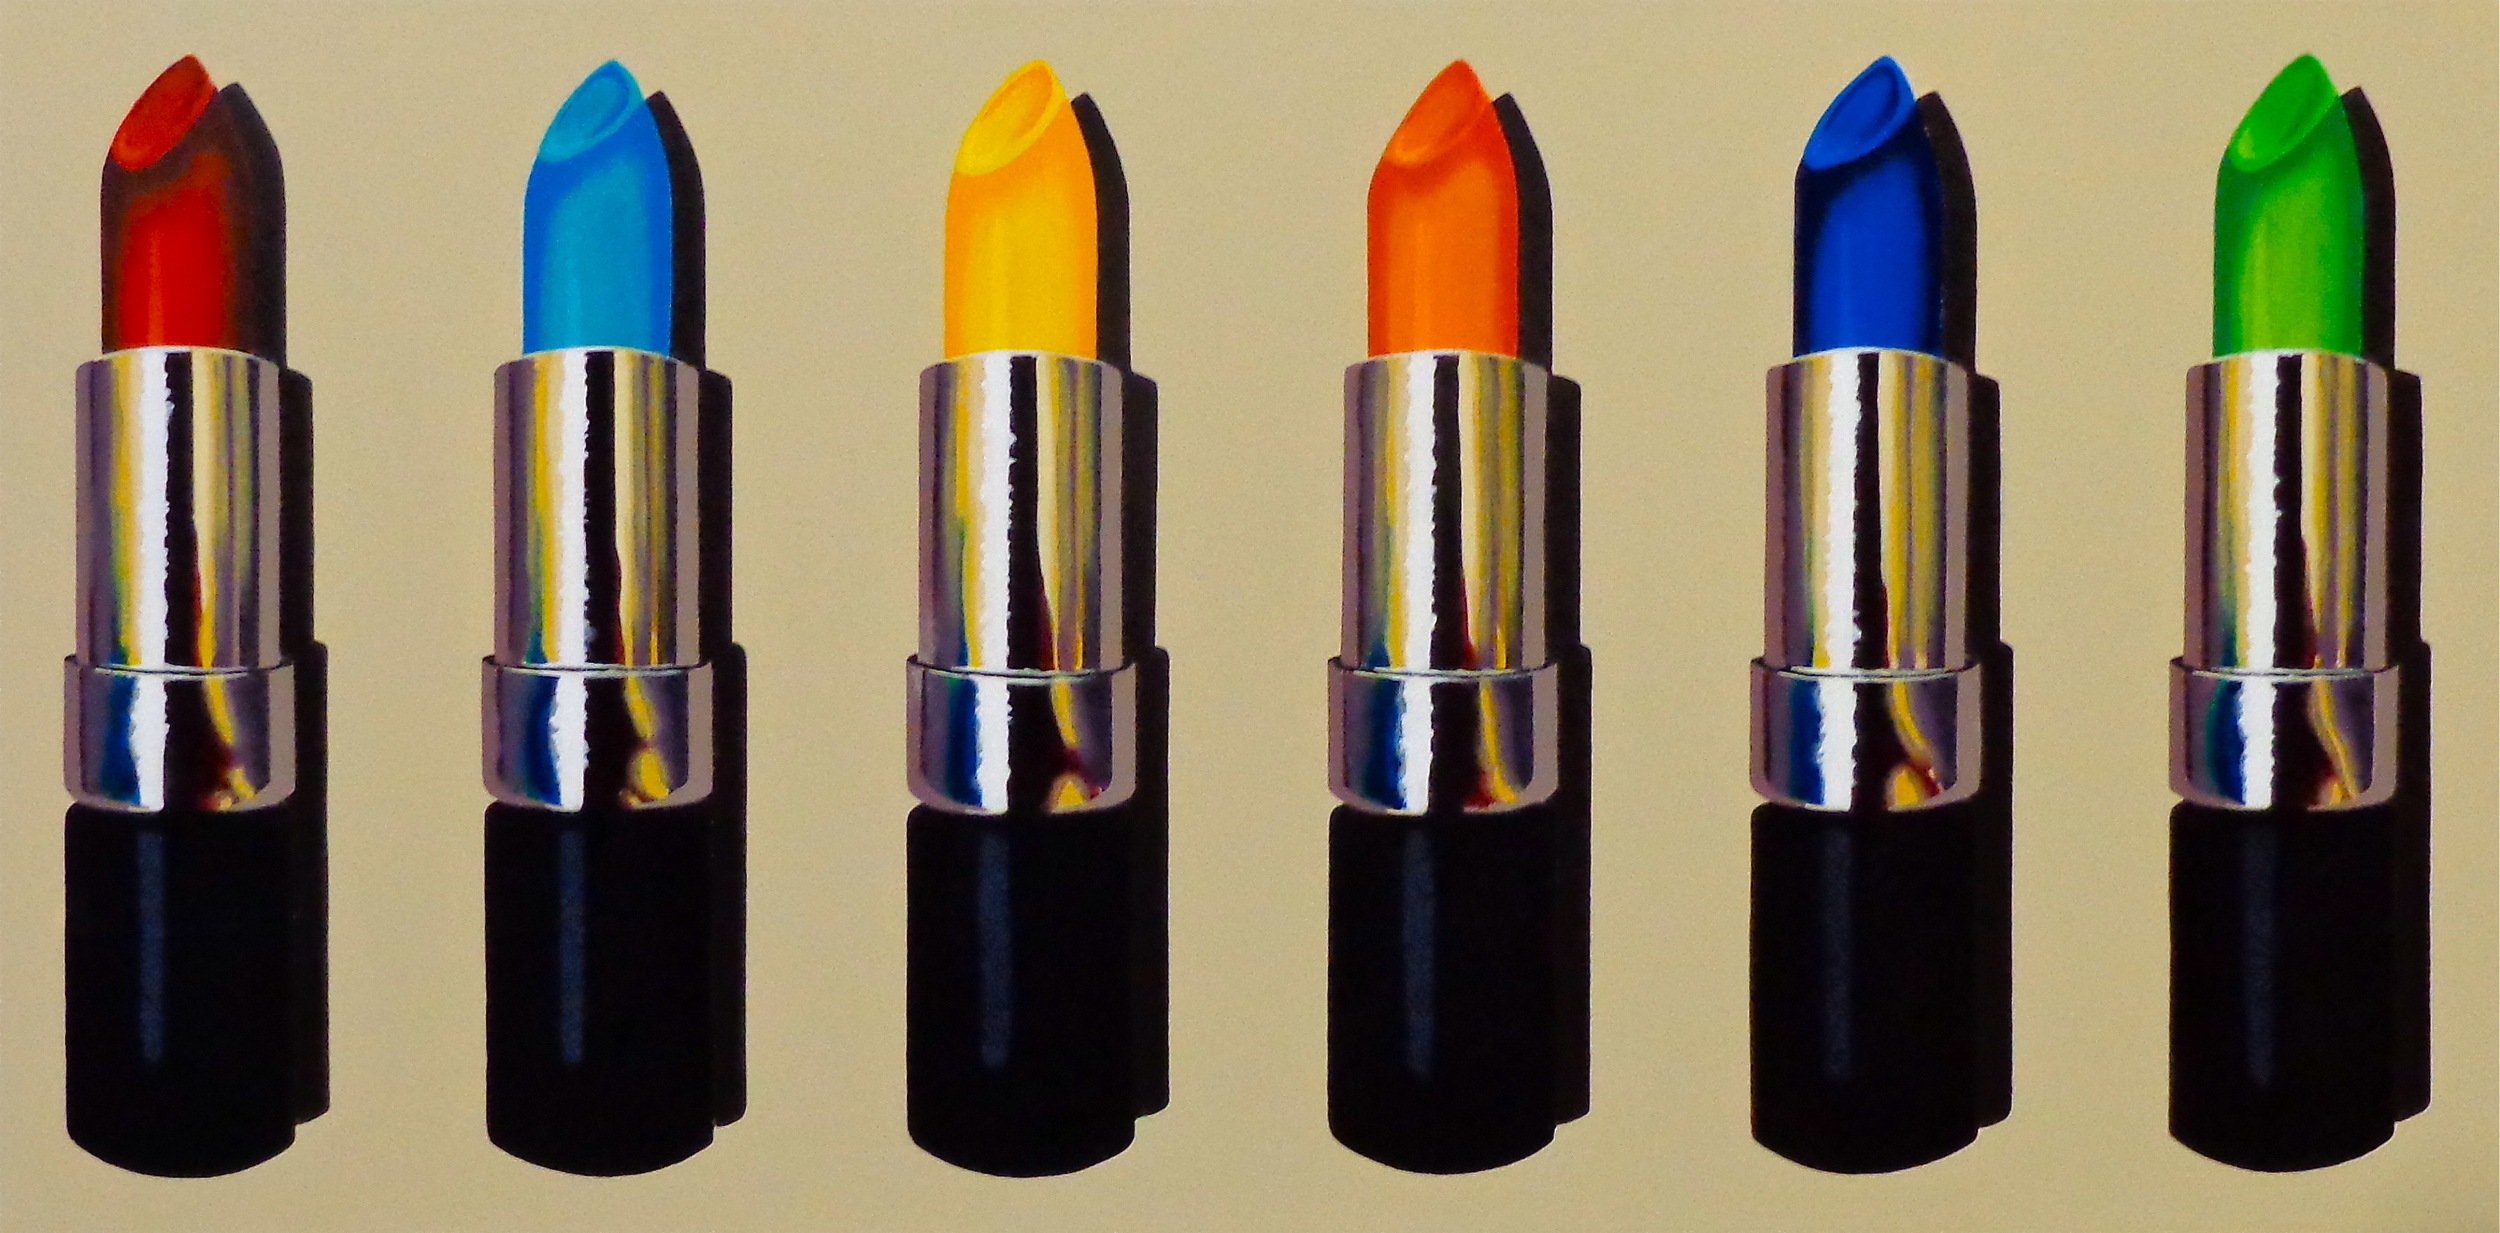   Six Lipstick -&nbsp; acrylic on canvas 18" x 36" 